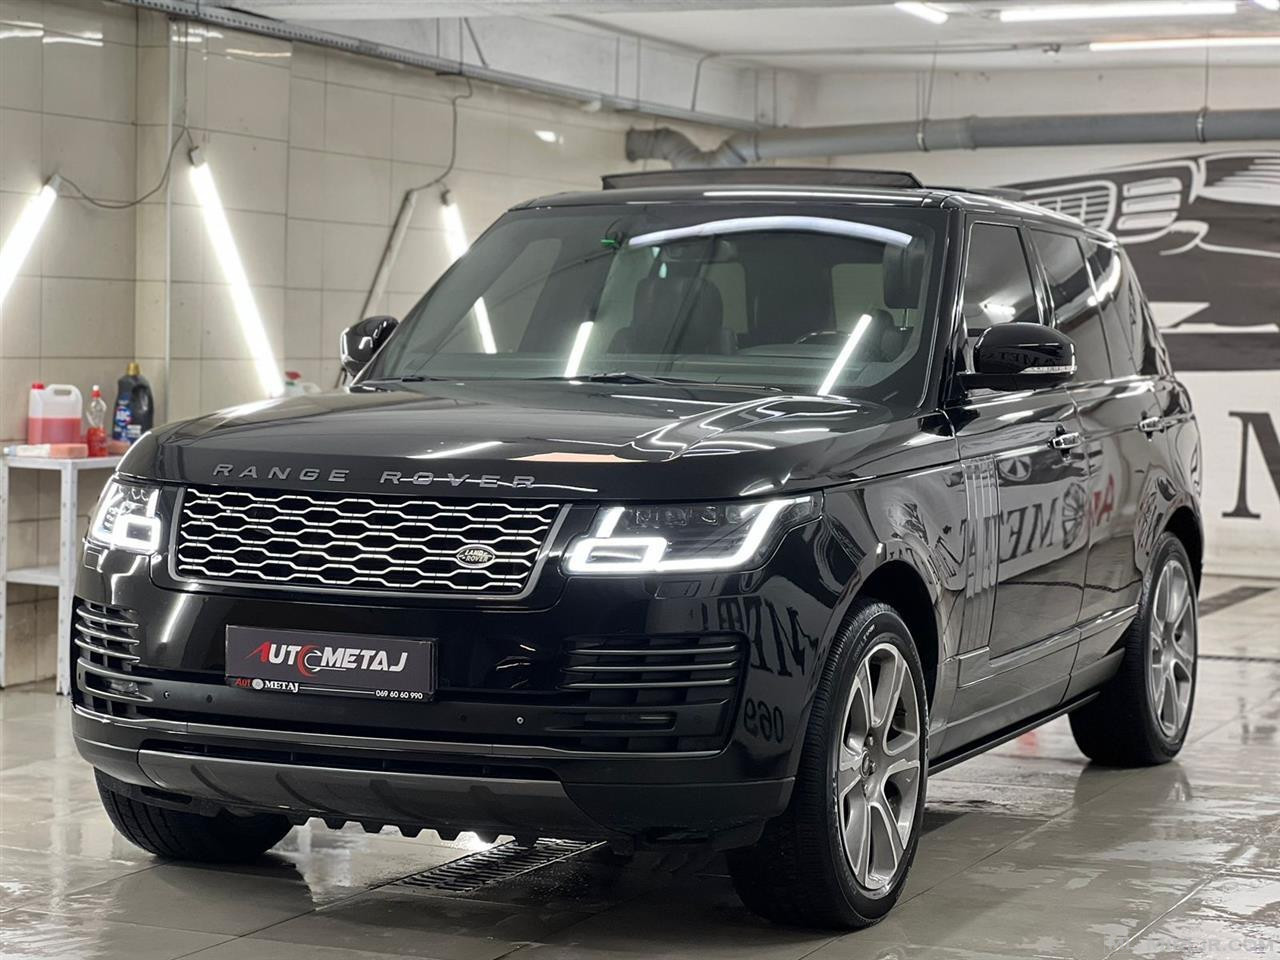  Range Rover Vogue Viti Prodhimit Fundi 2014 4.4 Diesel